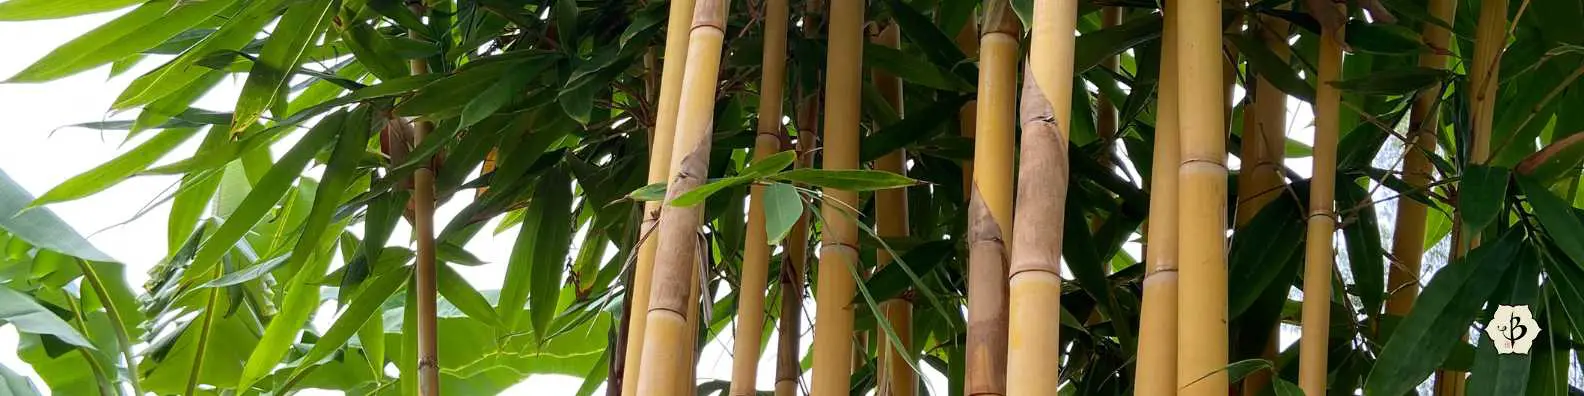 Sacred bali bamboo banner